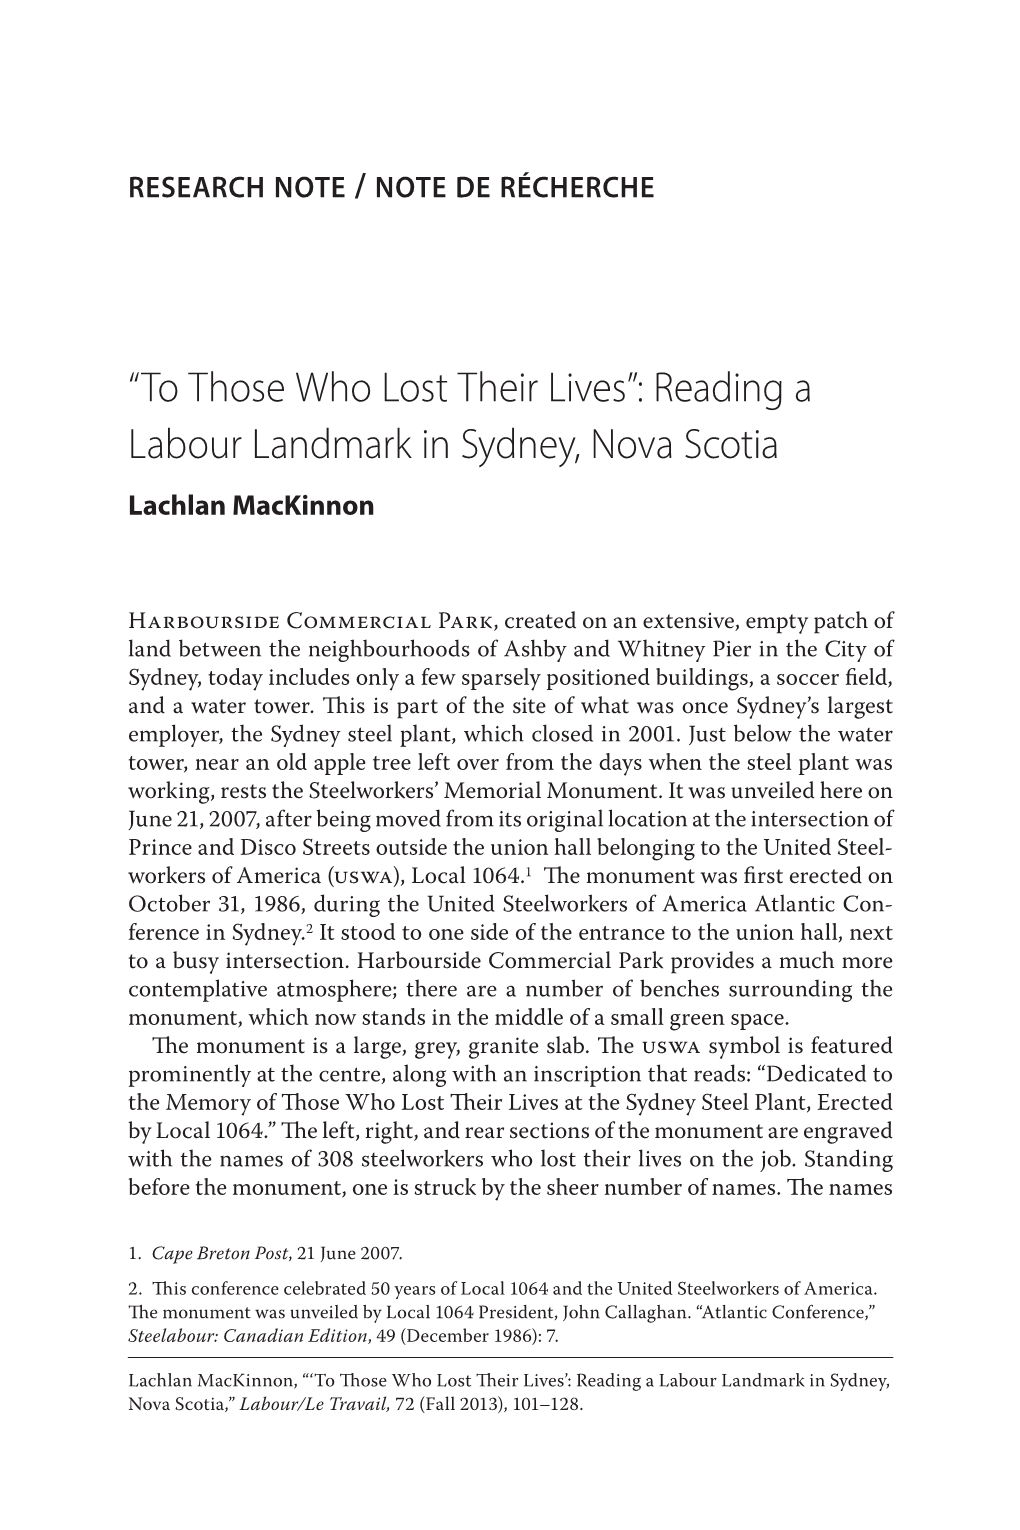 Reading a Labour Landmark in Sydney, Nova Scotia Lachlan Mackinnon